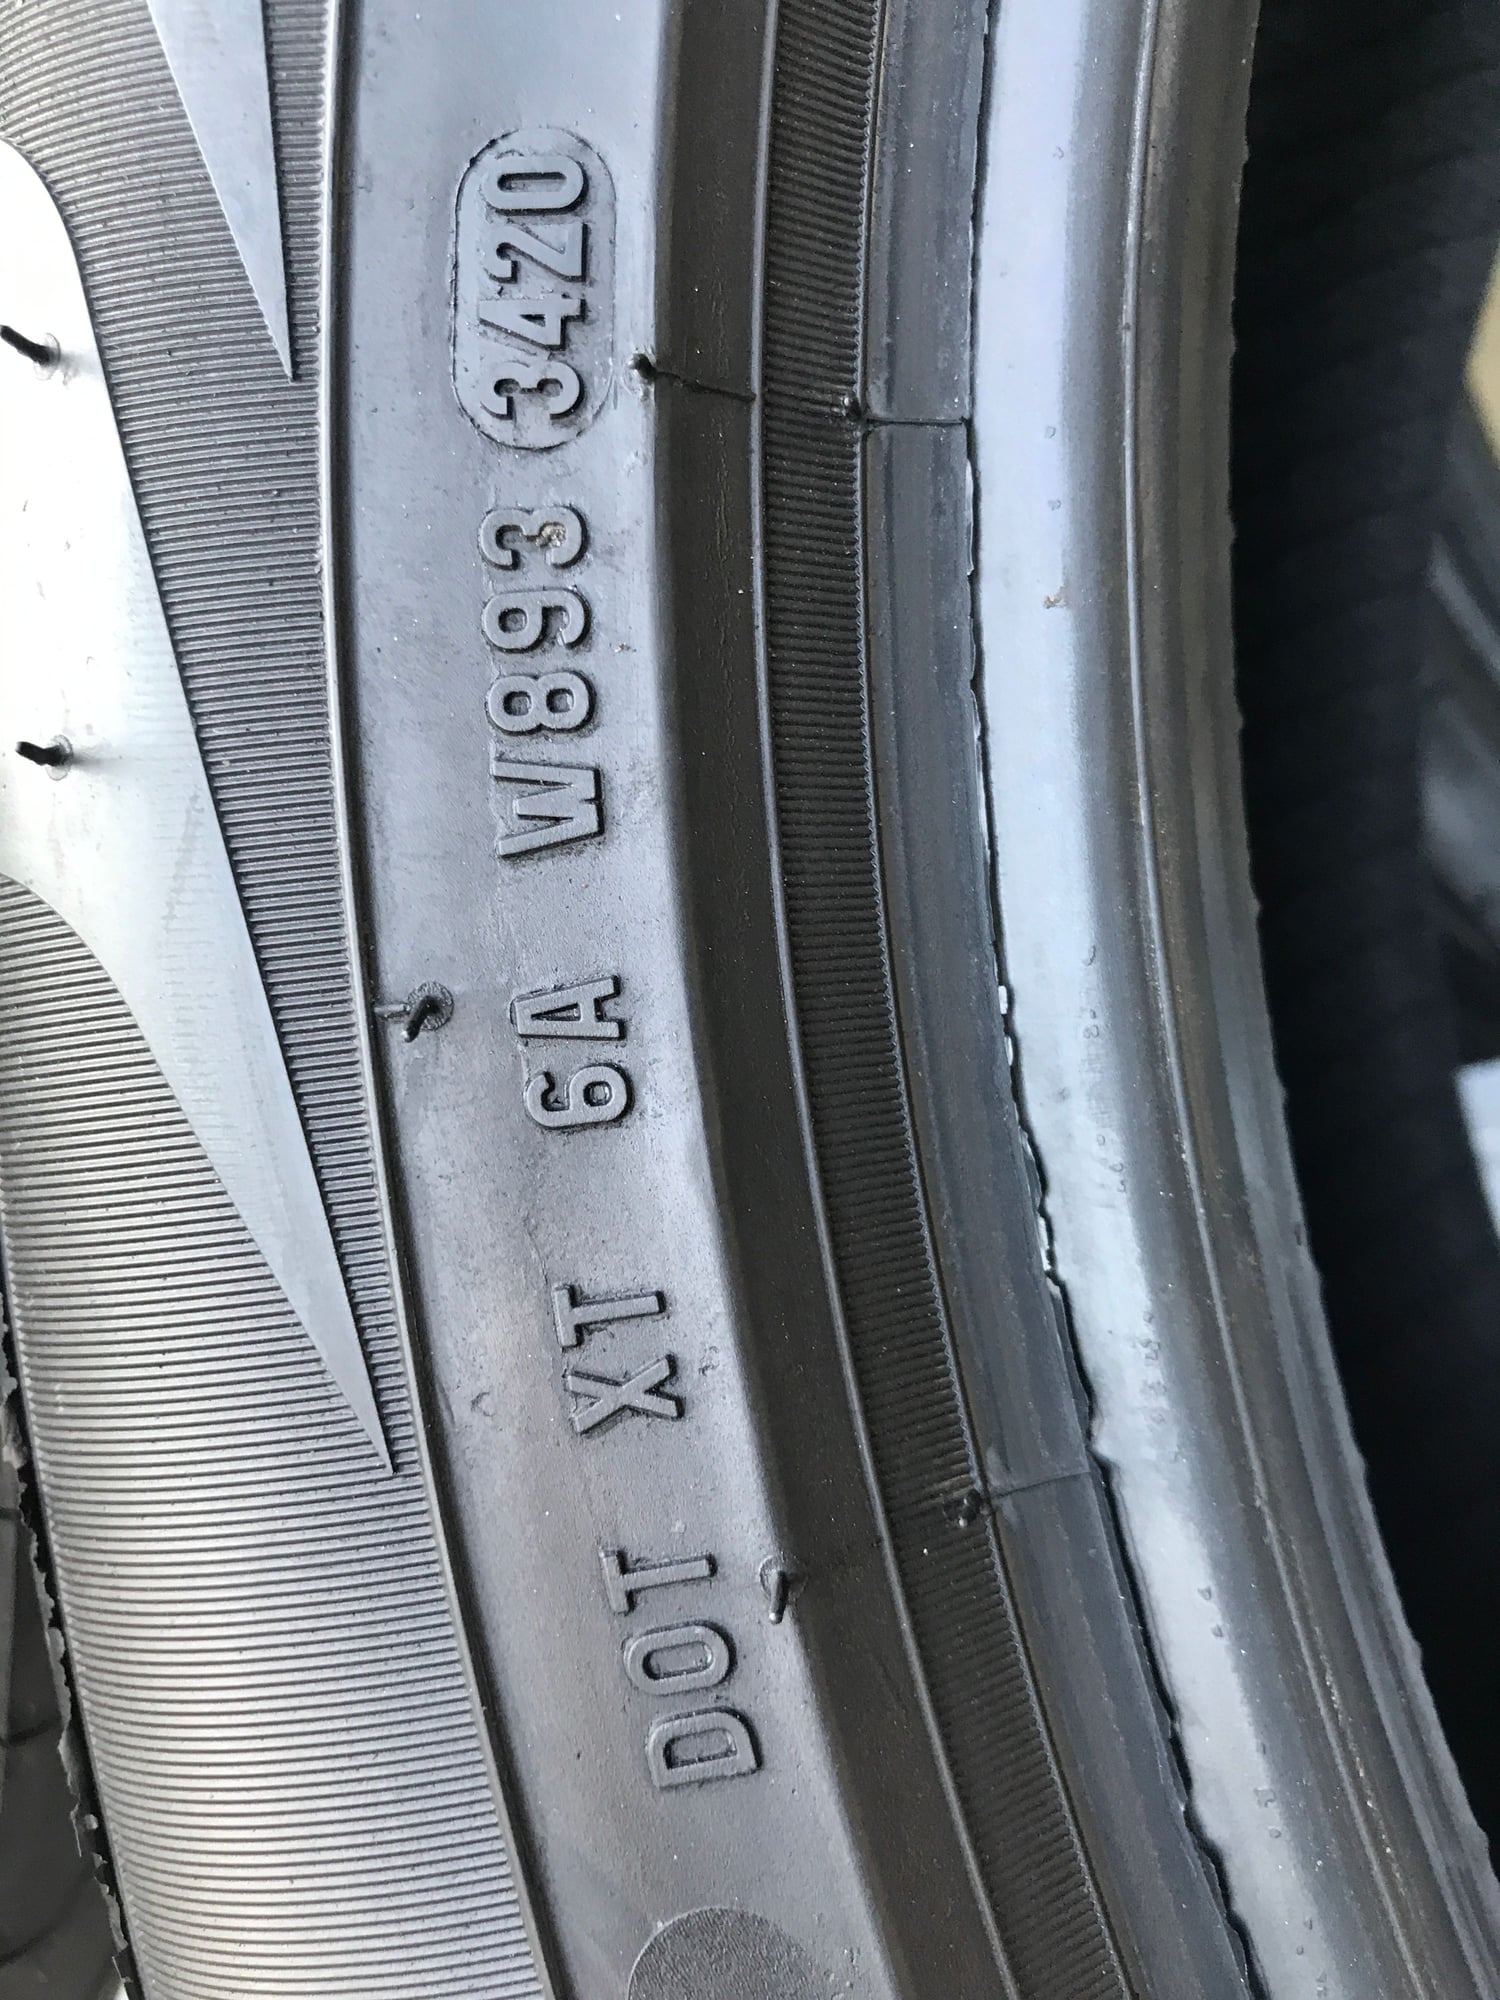 Wheels and Tires/Axles - Pirelli Scorpion Verde Run Flat - Used - 0  All Models - Bakersfield, CA 93309, United States